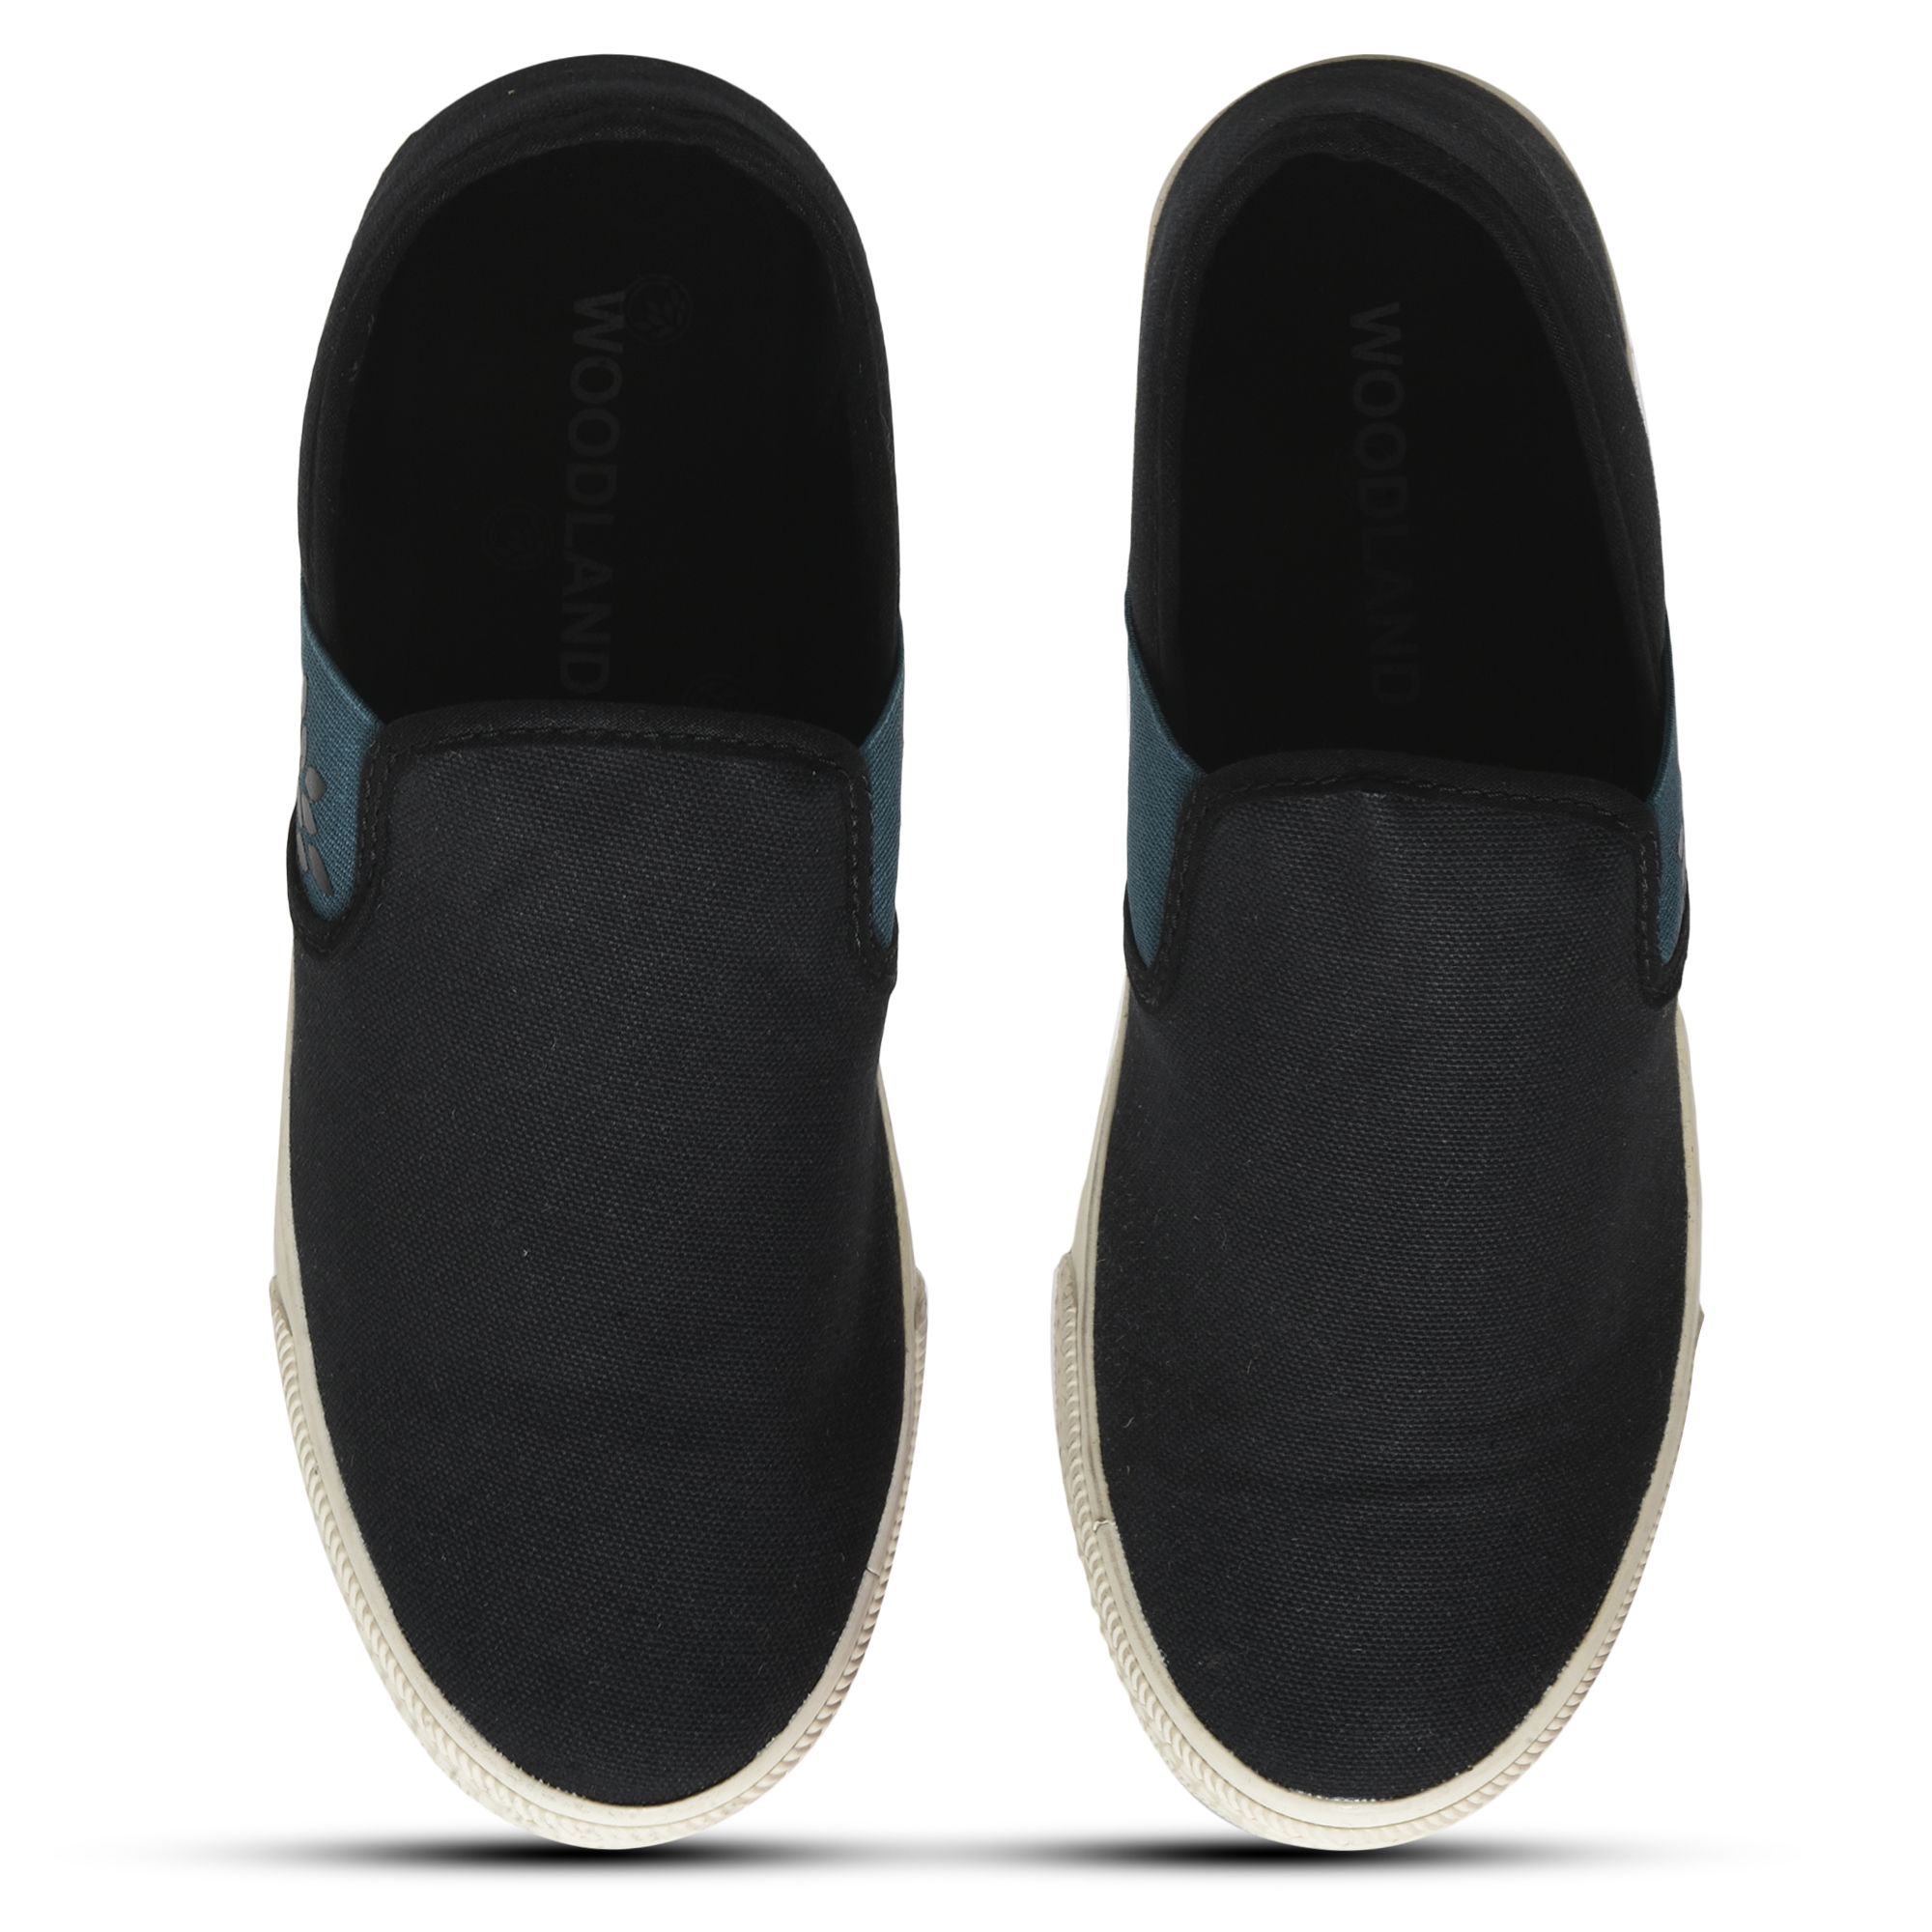 Black Slip on canvas shoes for men